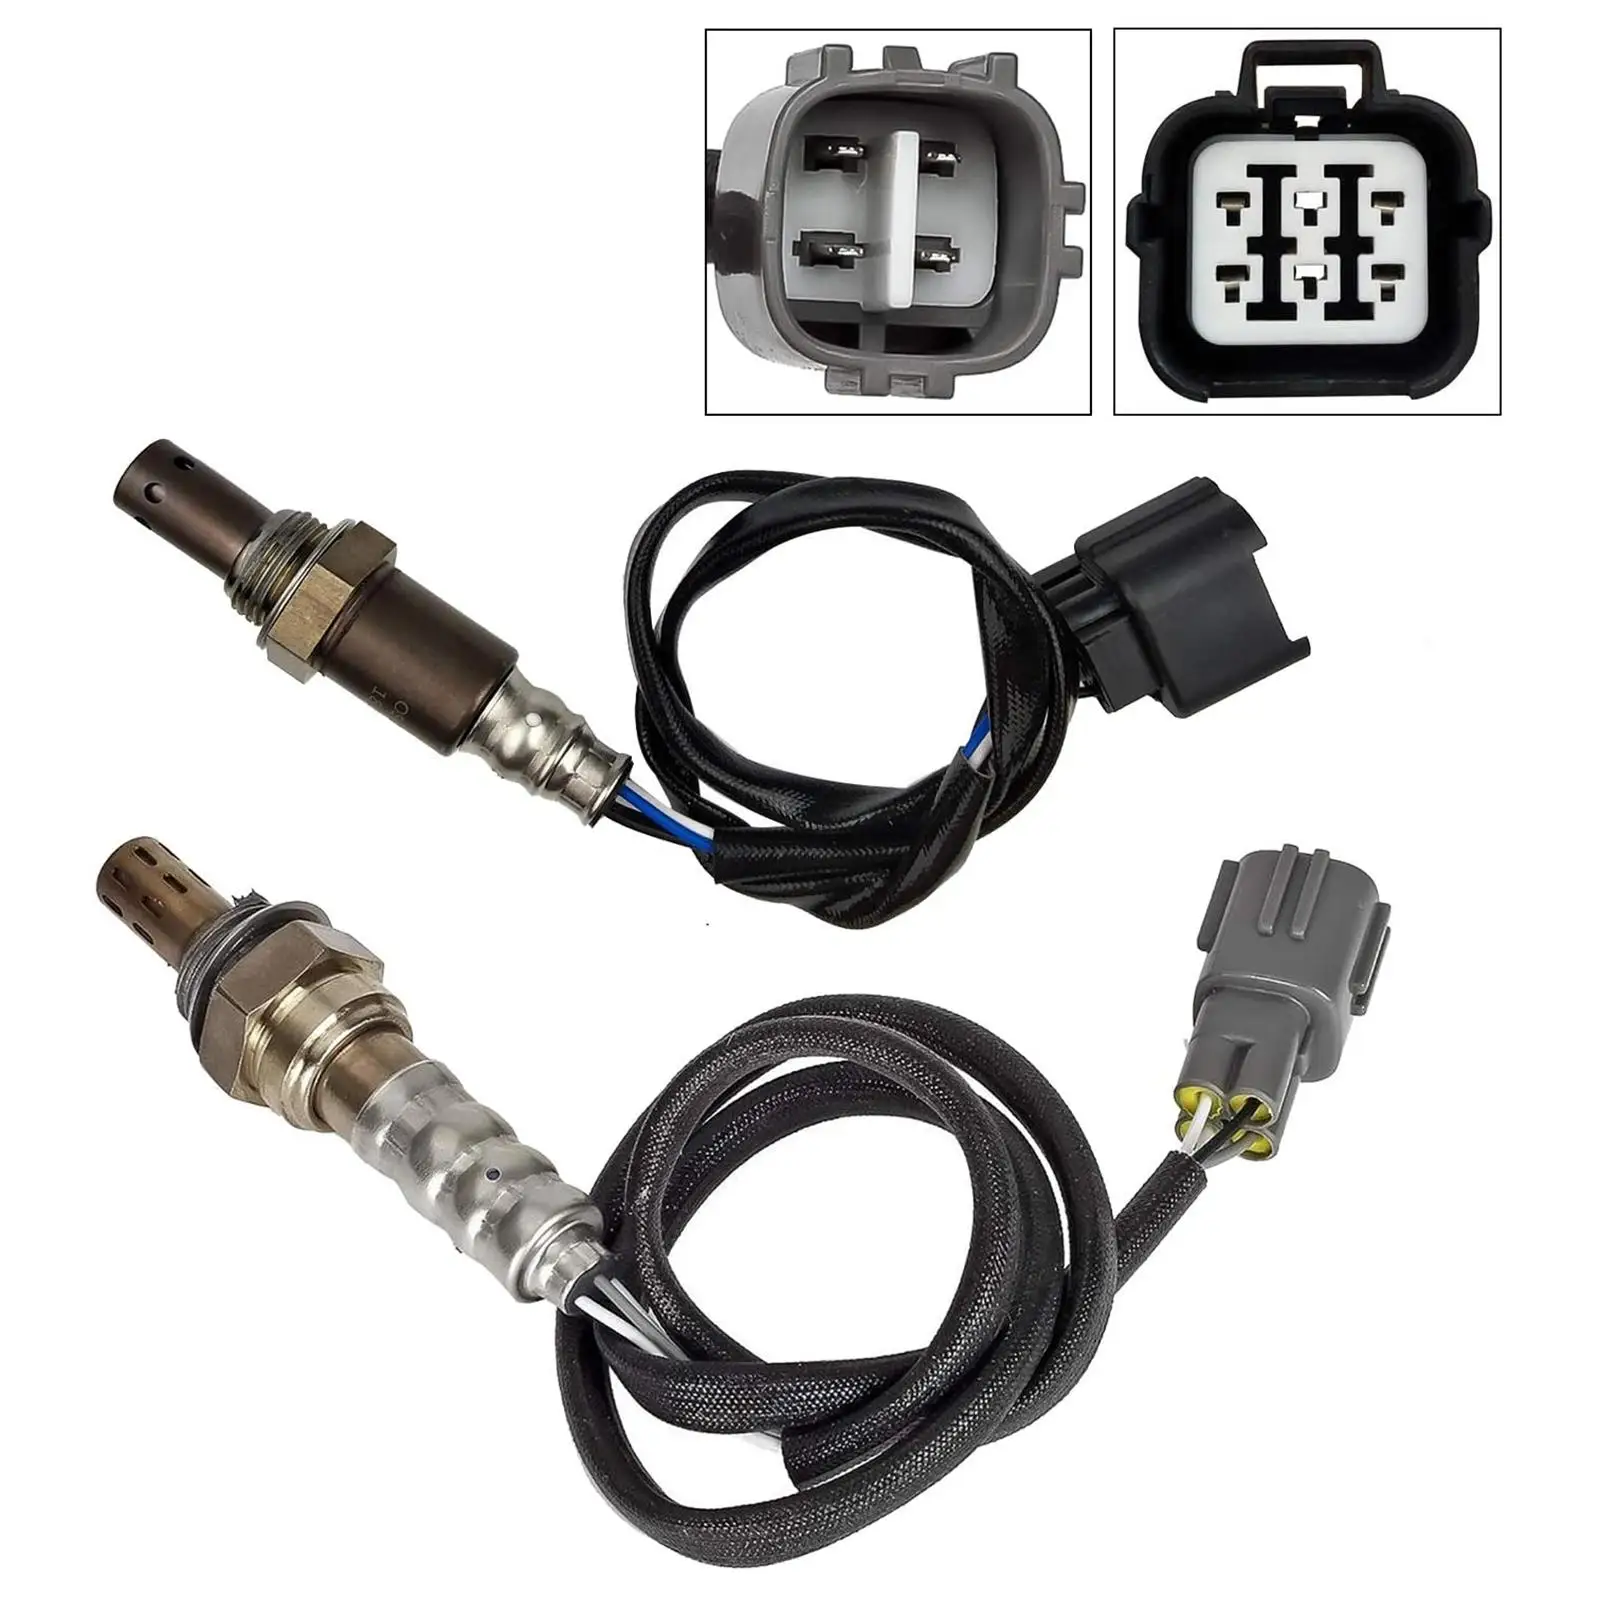 Set of-Downstream Oxygen Sensor Easy Installation Replaces O2 Sensor Fit for Impreza 2.5L H4 06-2011 234-4445 234-9123